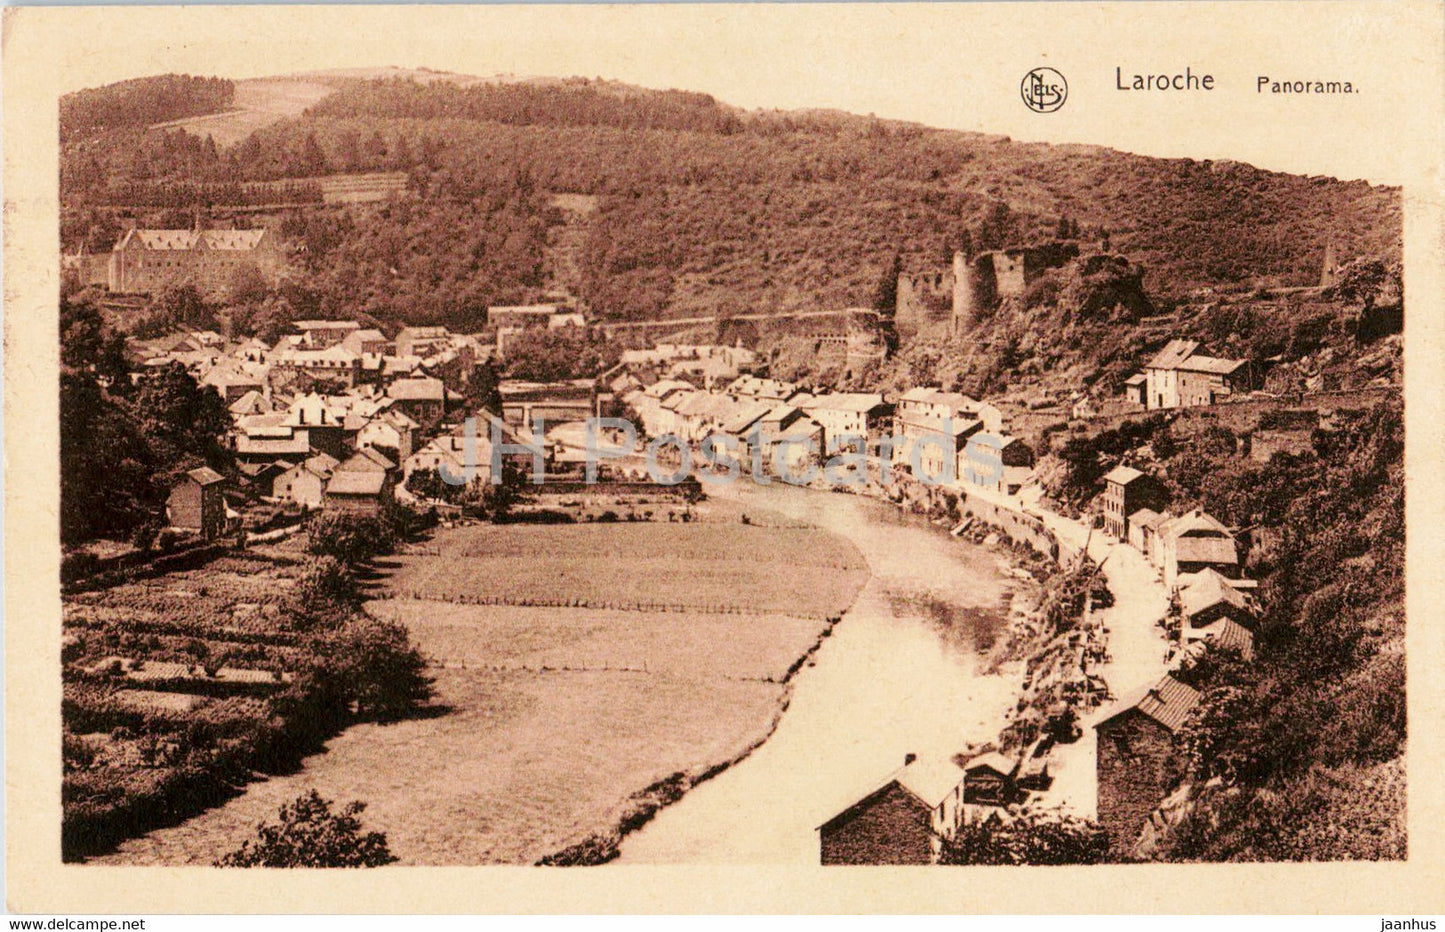 Laroche - Panorama - old postcard - Belgium - unused - JH Postcards